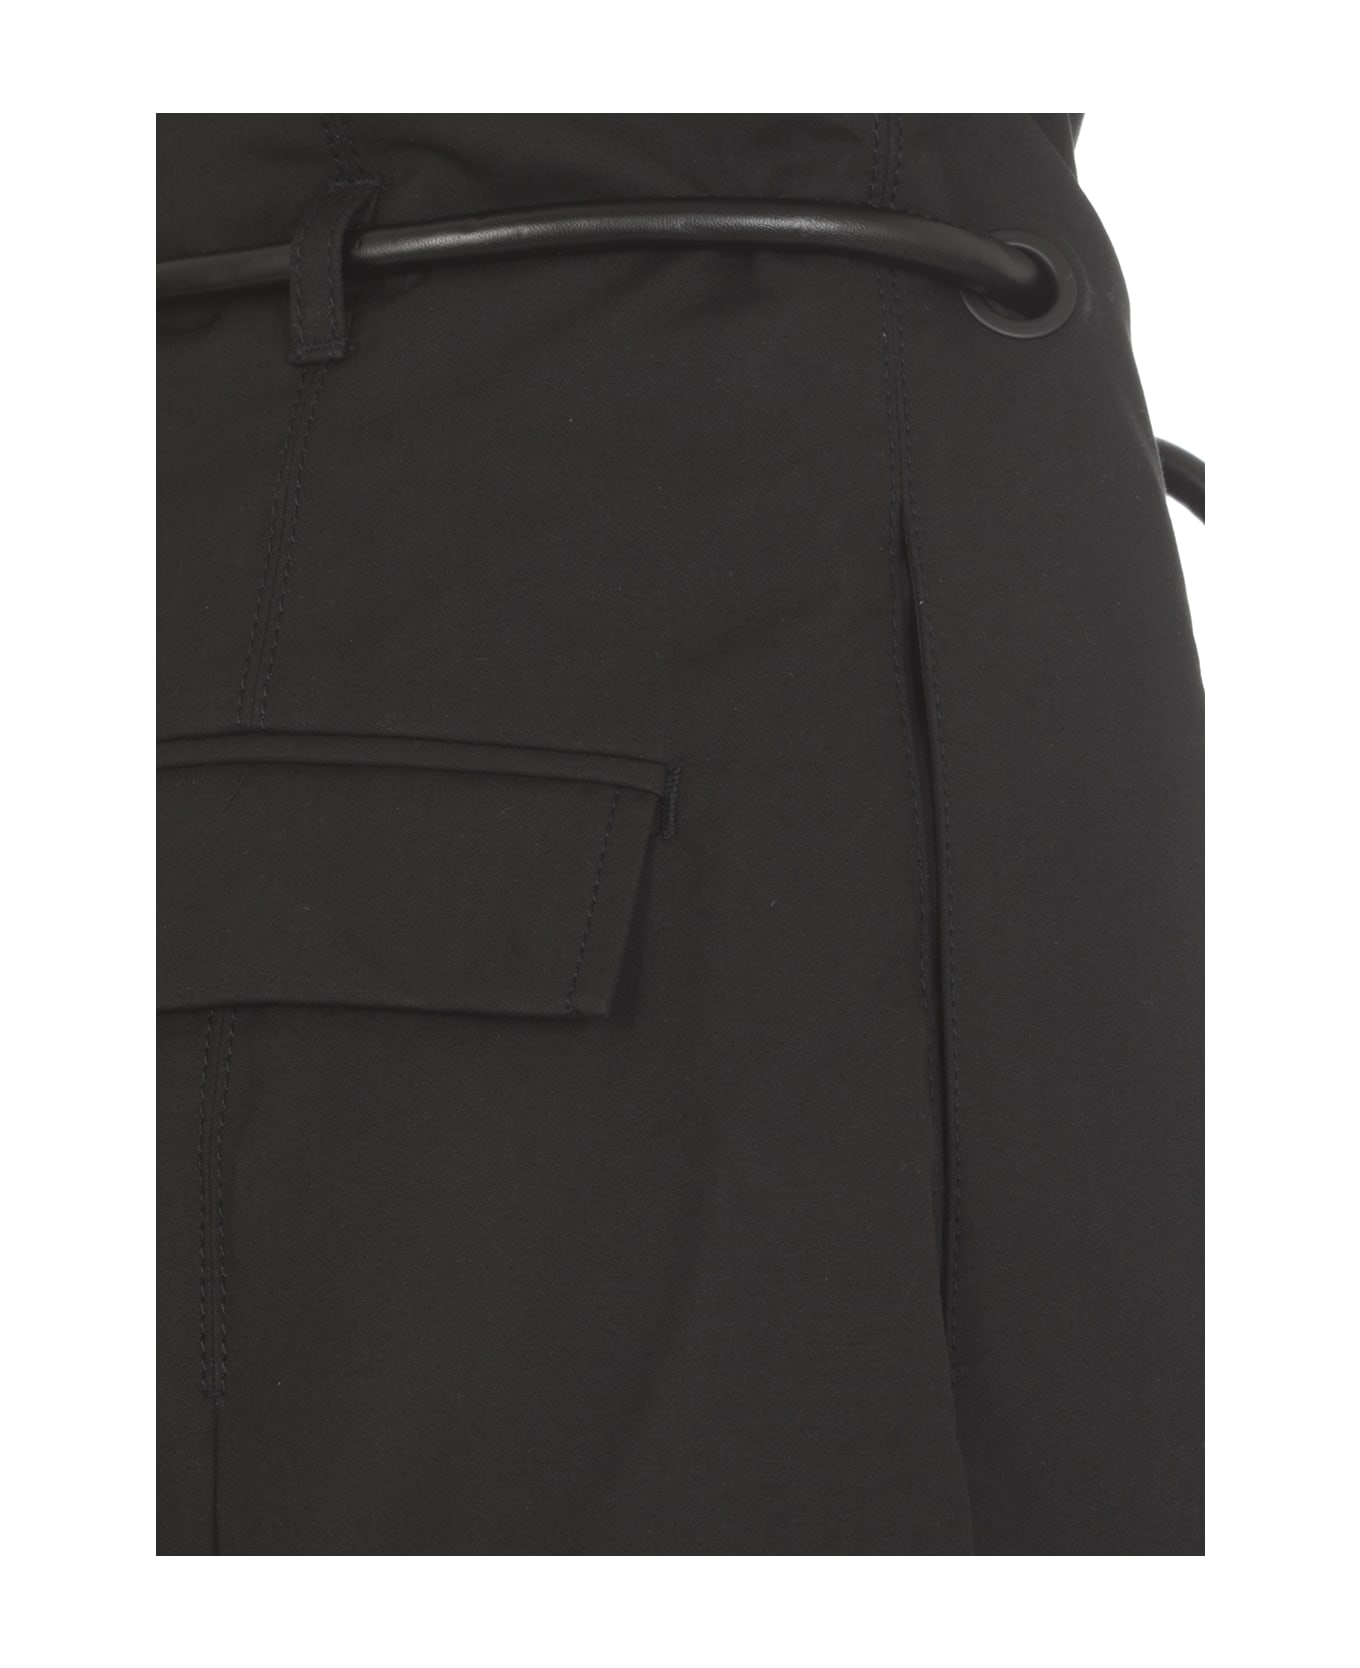 3.1 Phillip Lim Origami Skirt - Black スカート